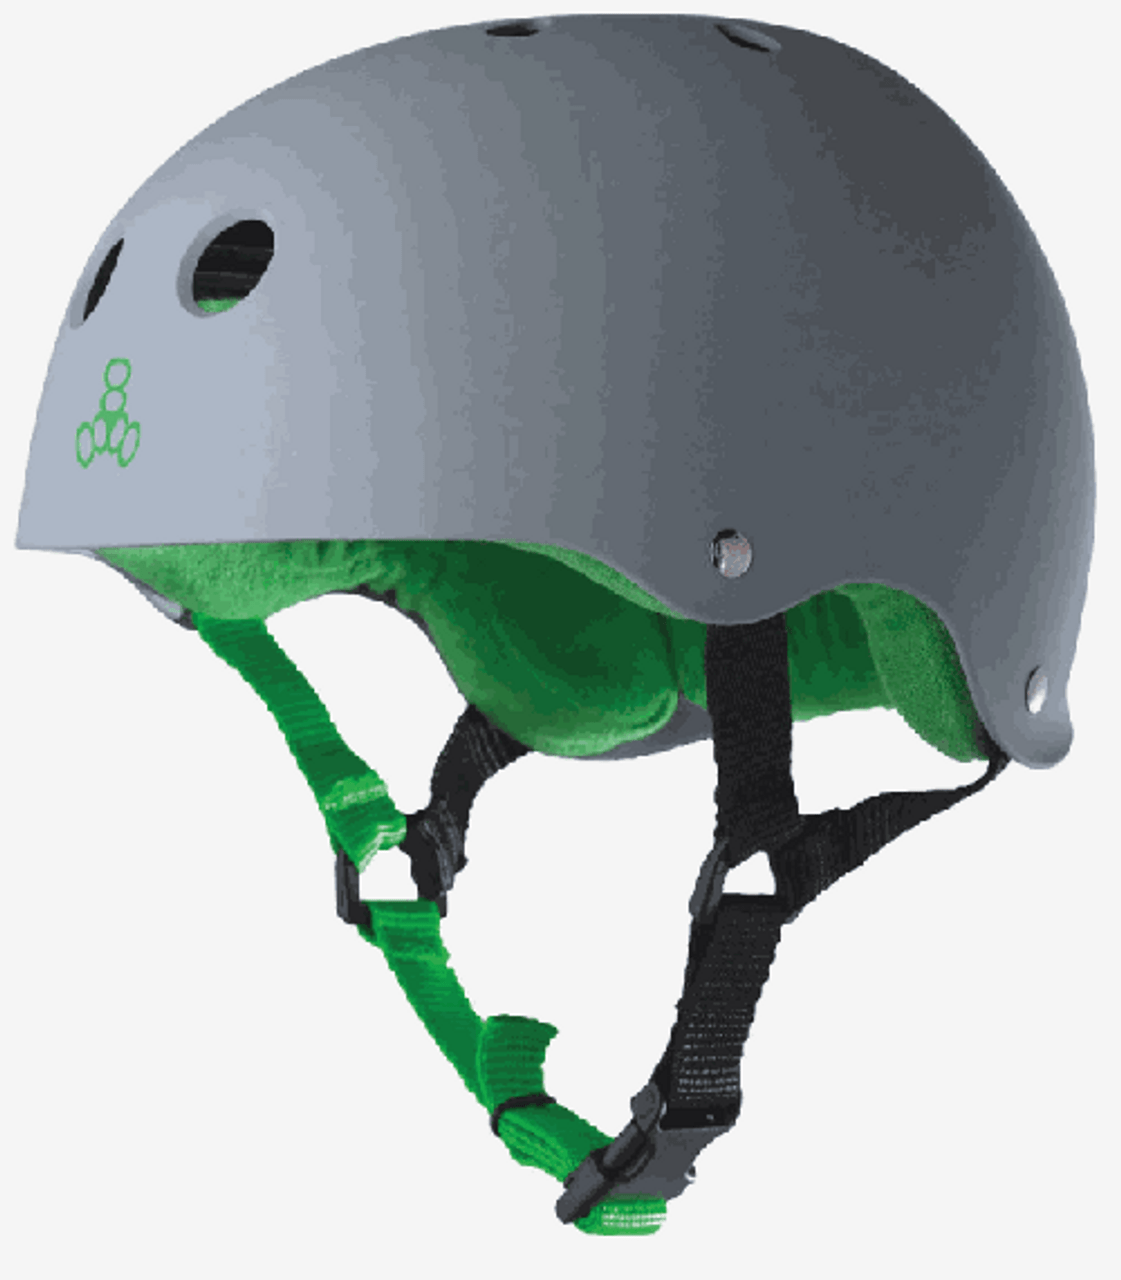 888 Helmet Carbon Green MD